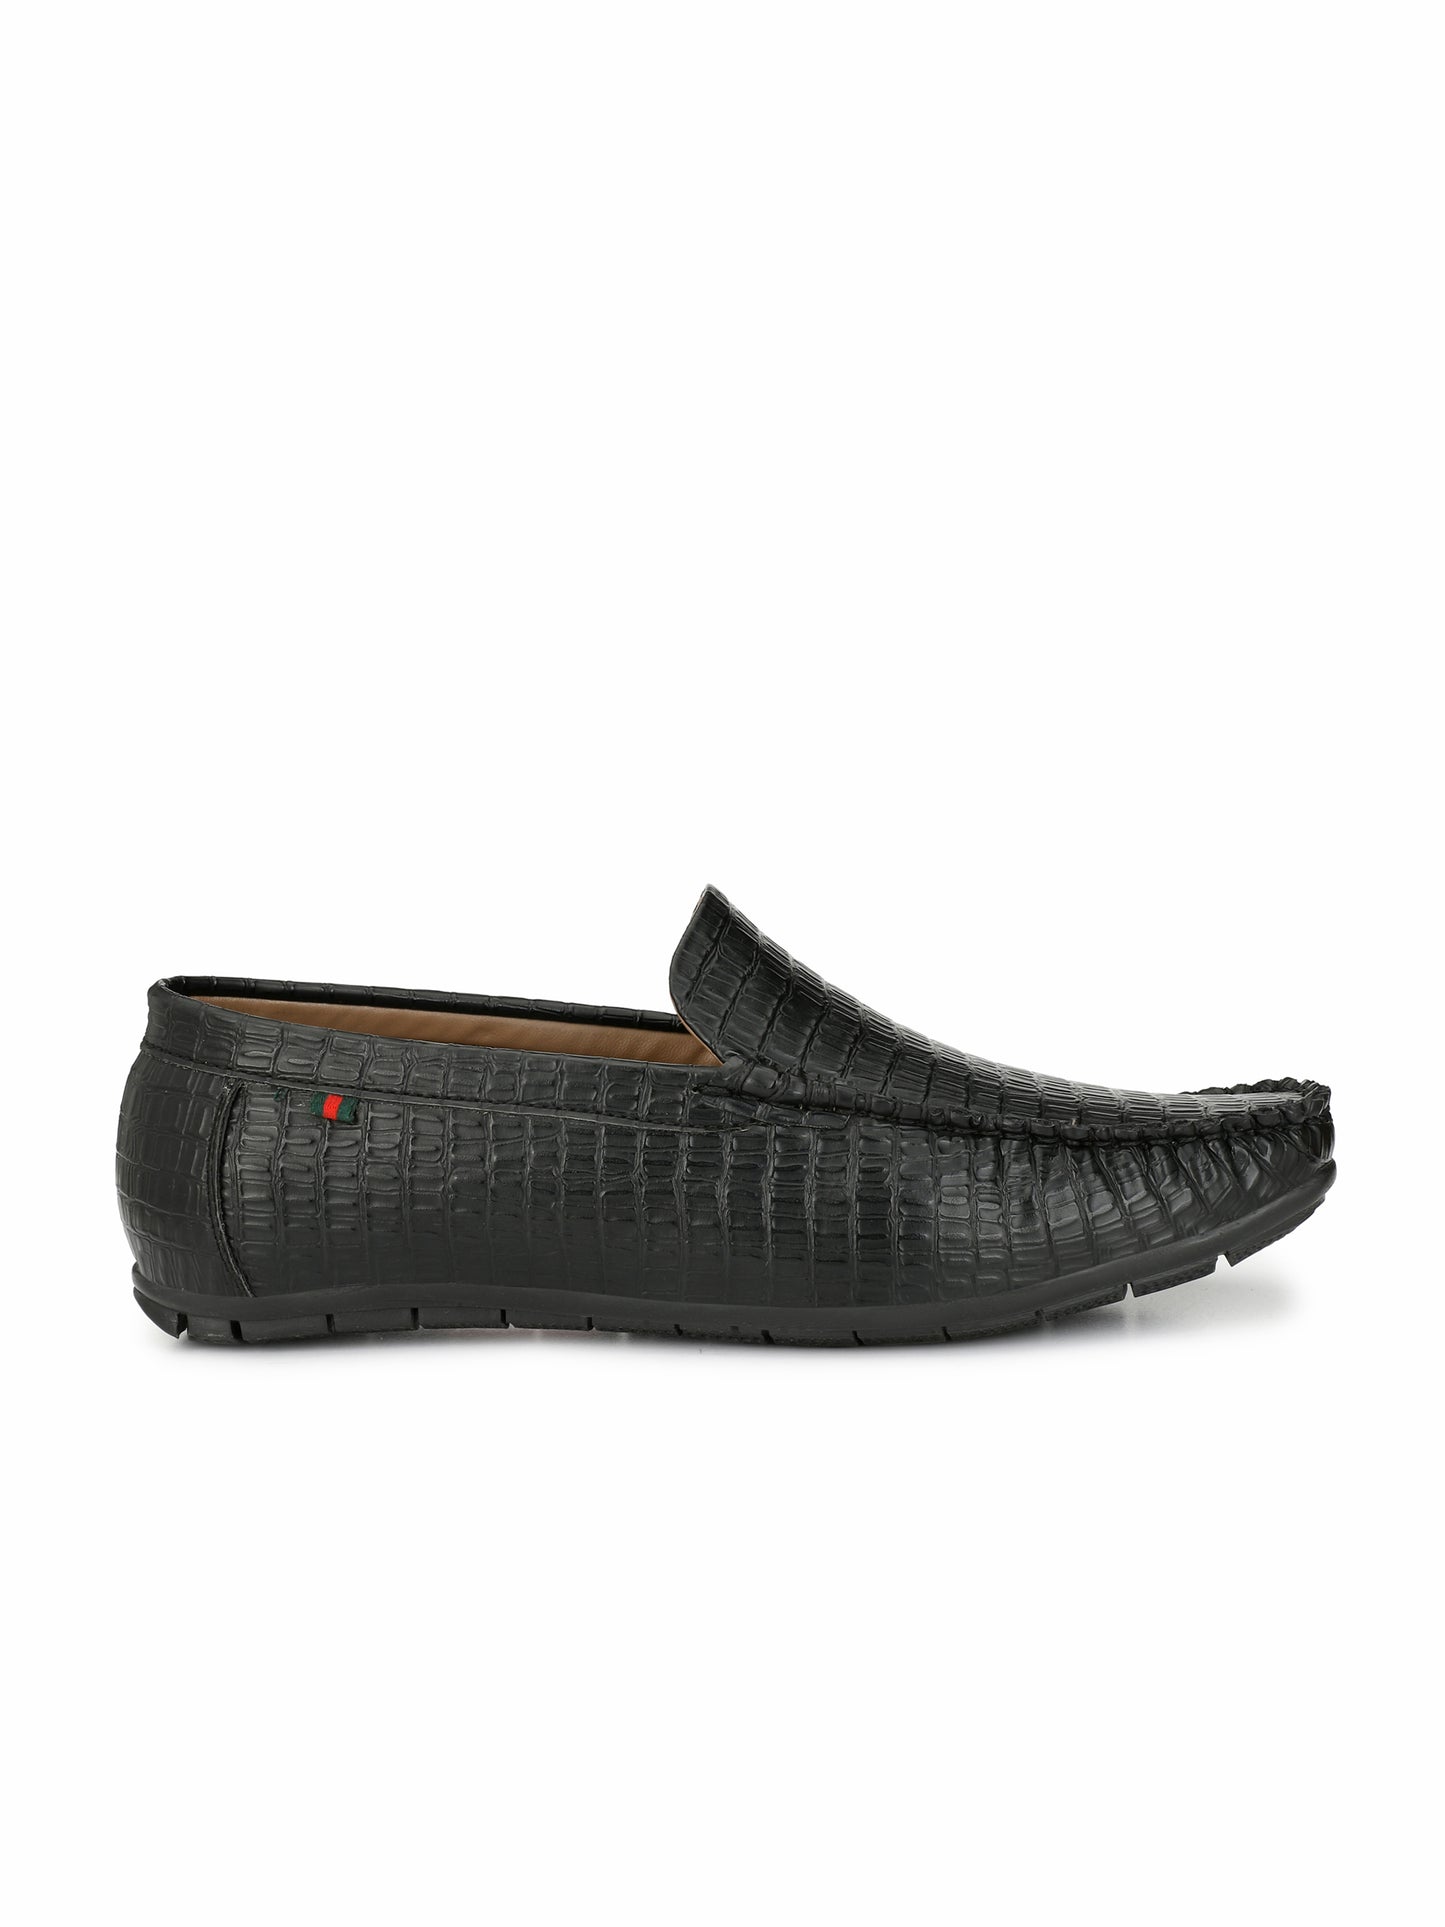 Guava Men's Stylish Black Casual Slip On Driving Loafers (GV15JA450)